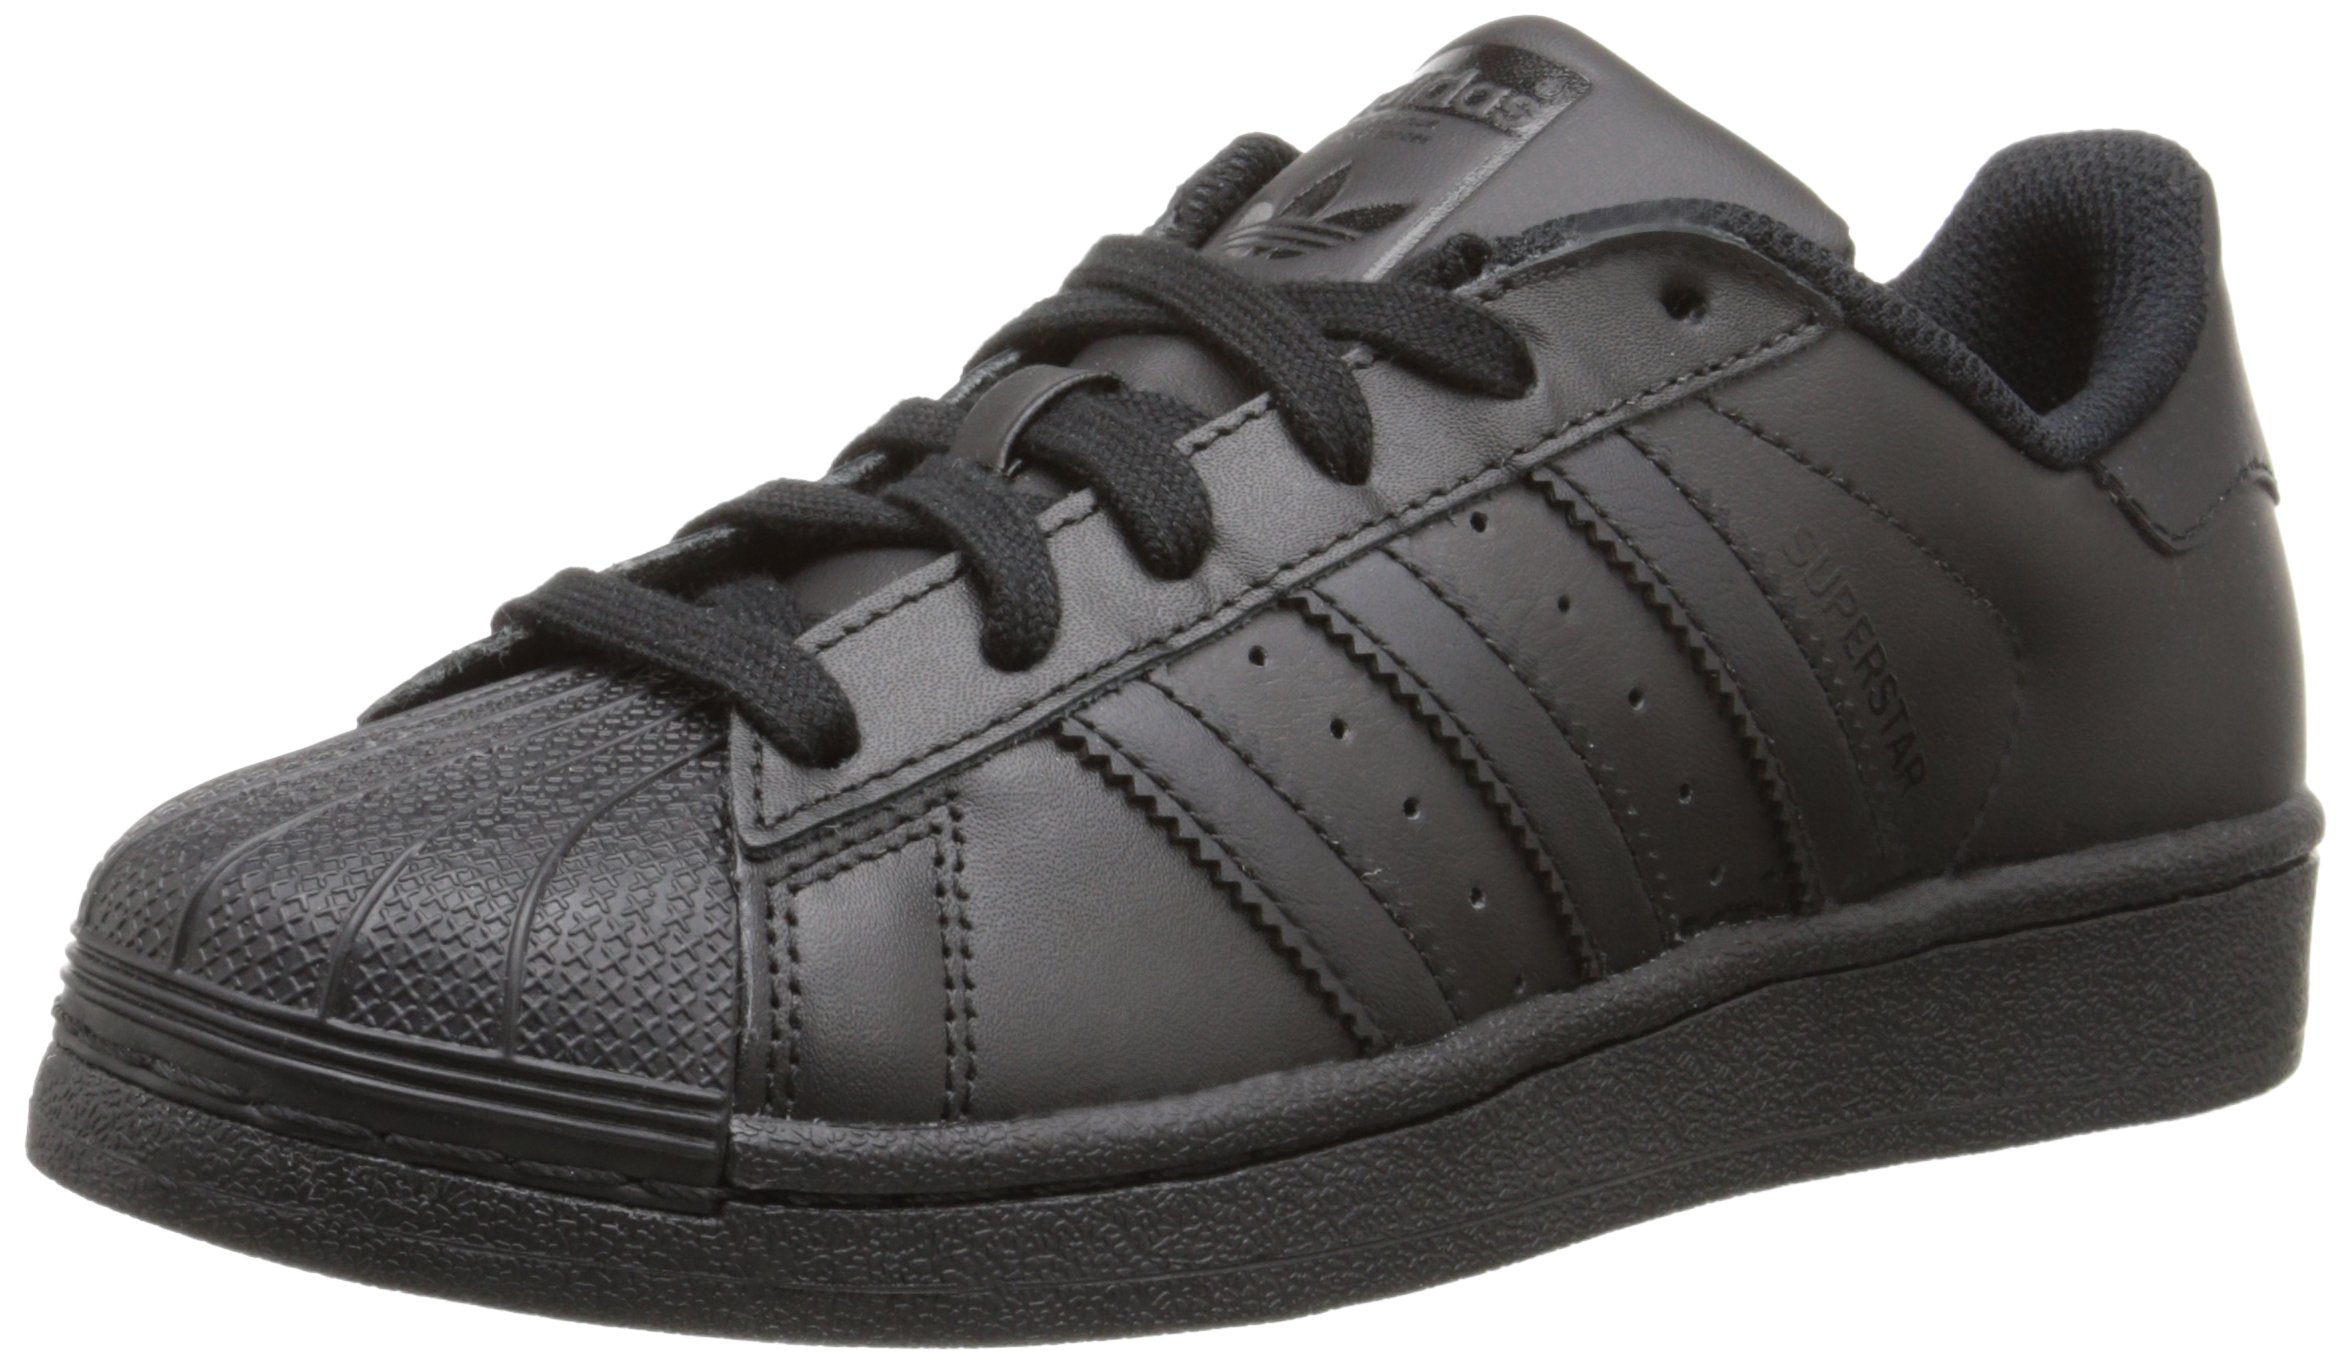 Adidas B25724: Originals Superstar Foundation J Casual Big Kid Black Low  Sneaker | eBay